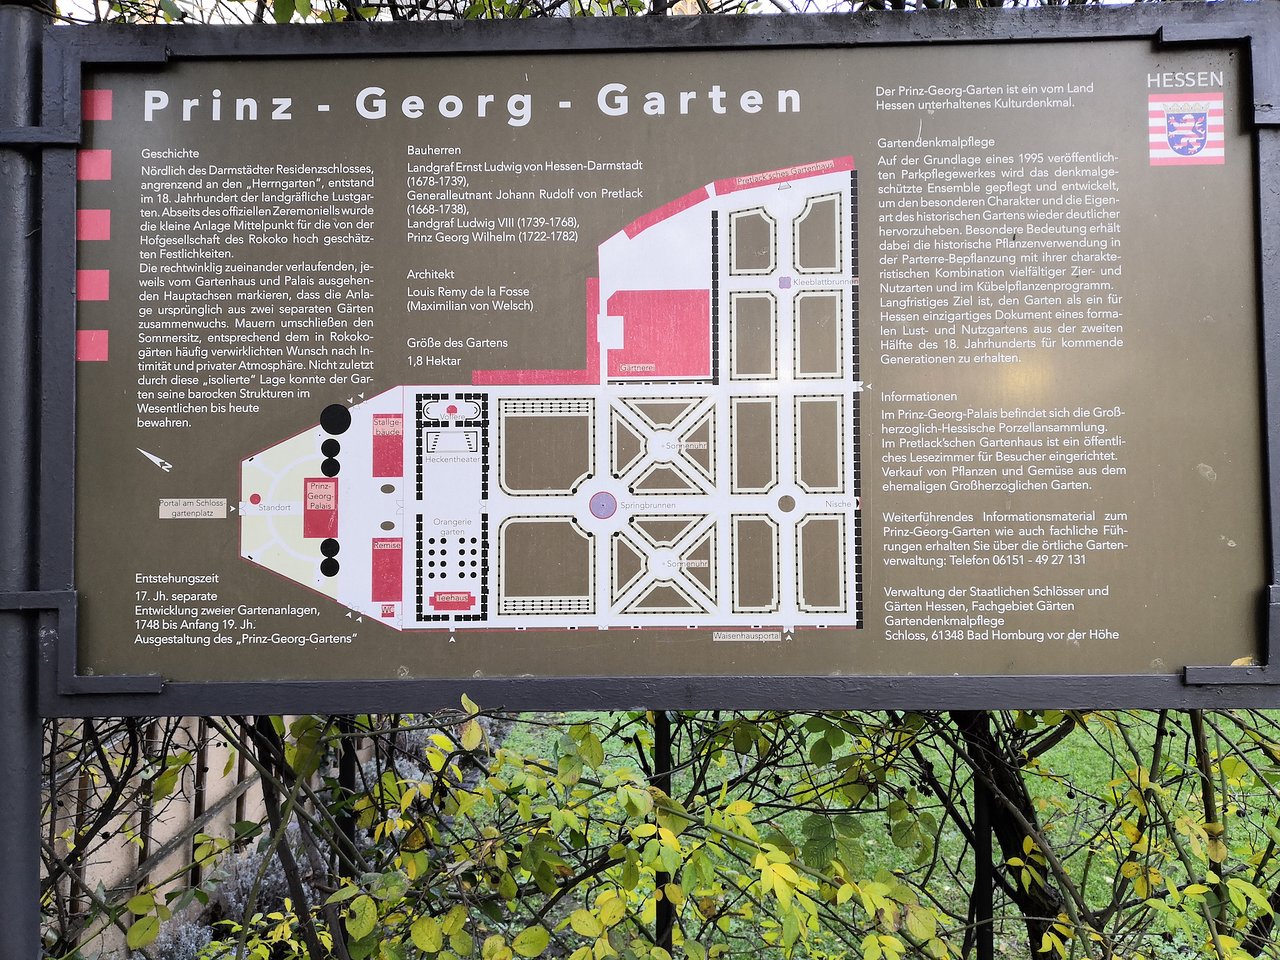 Garten.de Einzigartig Prinz Georg Garten ÐÐ°ÑÐ¼ÑÑÐ°Ð´Ñ Ð ÑÑÑÐ¸Ðµ ÑÐ¾Ð²ÐµÑÑ Ð¿ÐµÑÐµÐ´ Ð¿Ð¾ÑÐµÑÐµÐ½Ð¸ÐµÐ¼